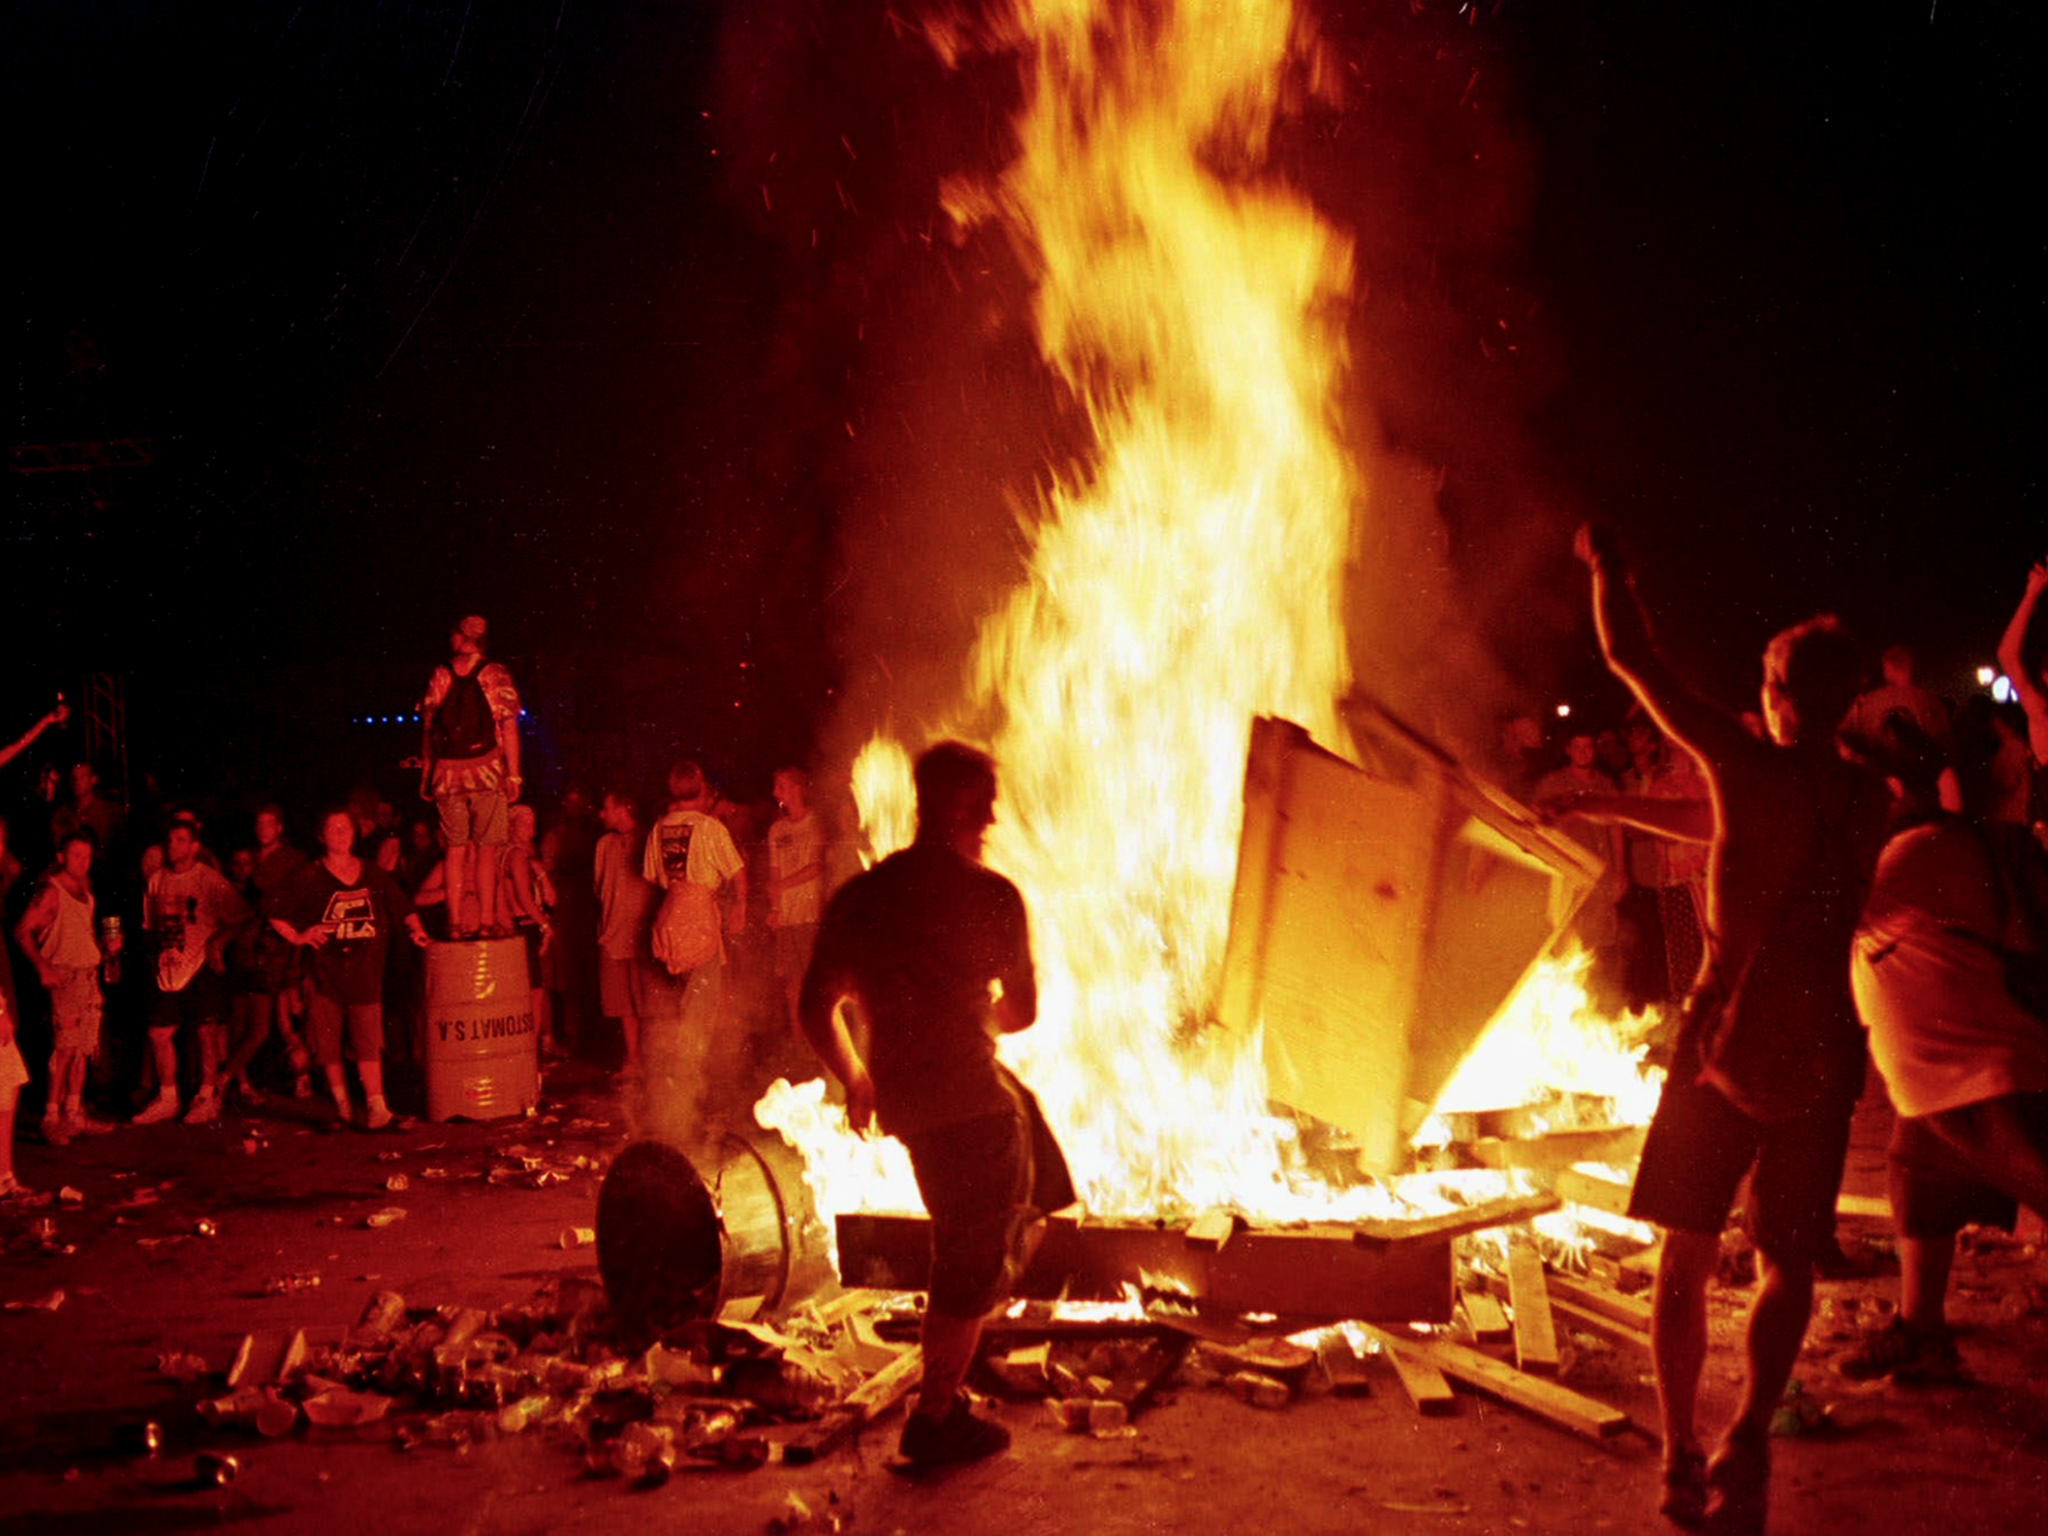 Festival goers set fires at Woodstock ’99